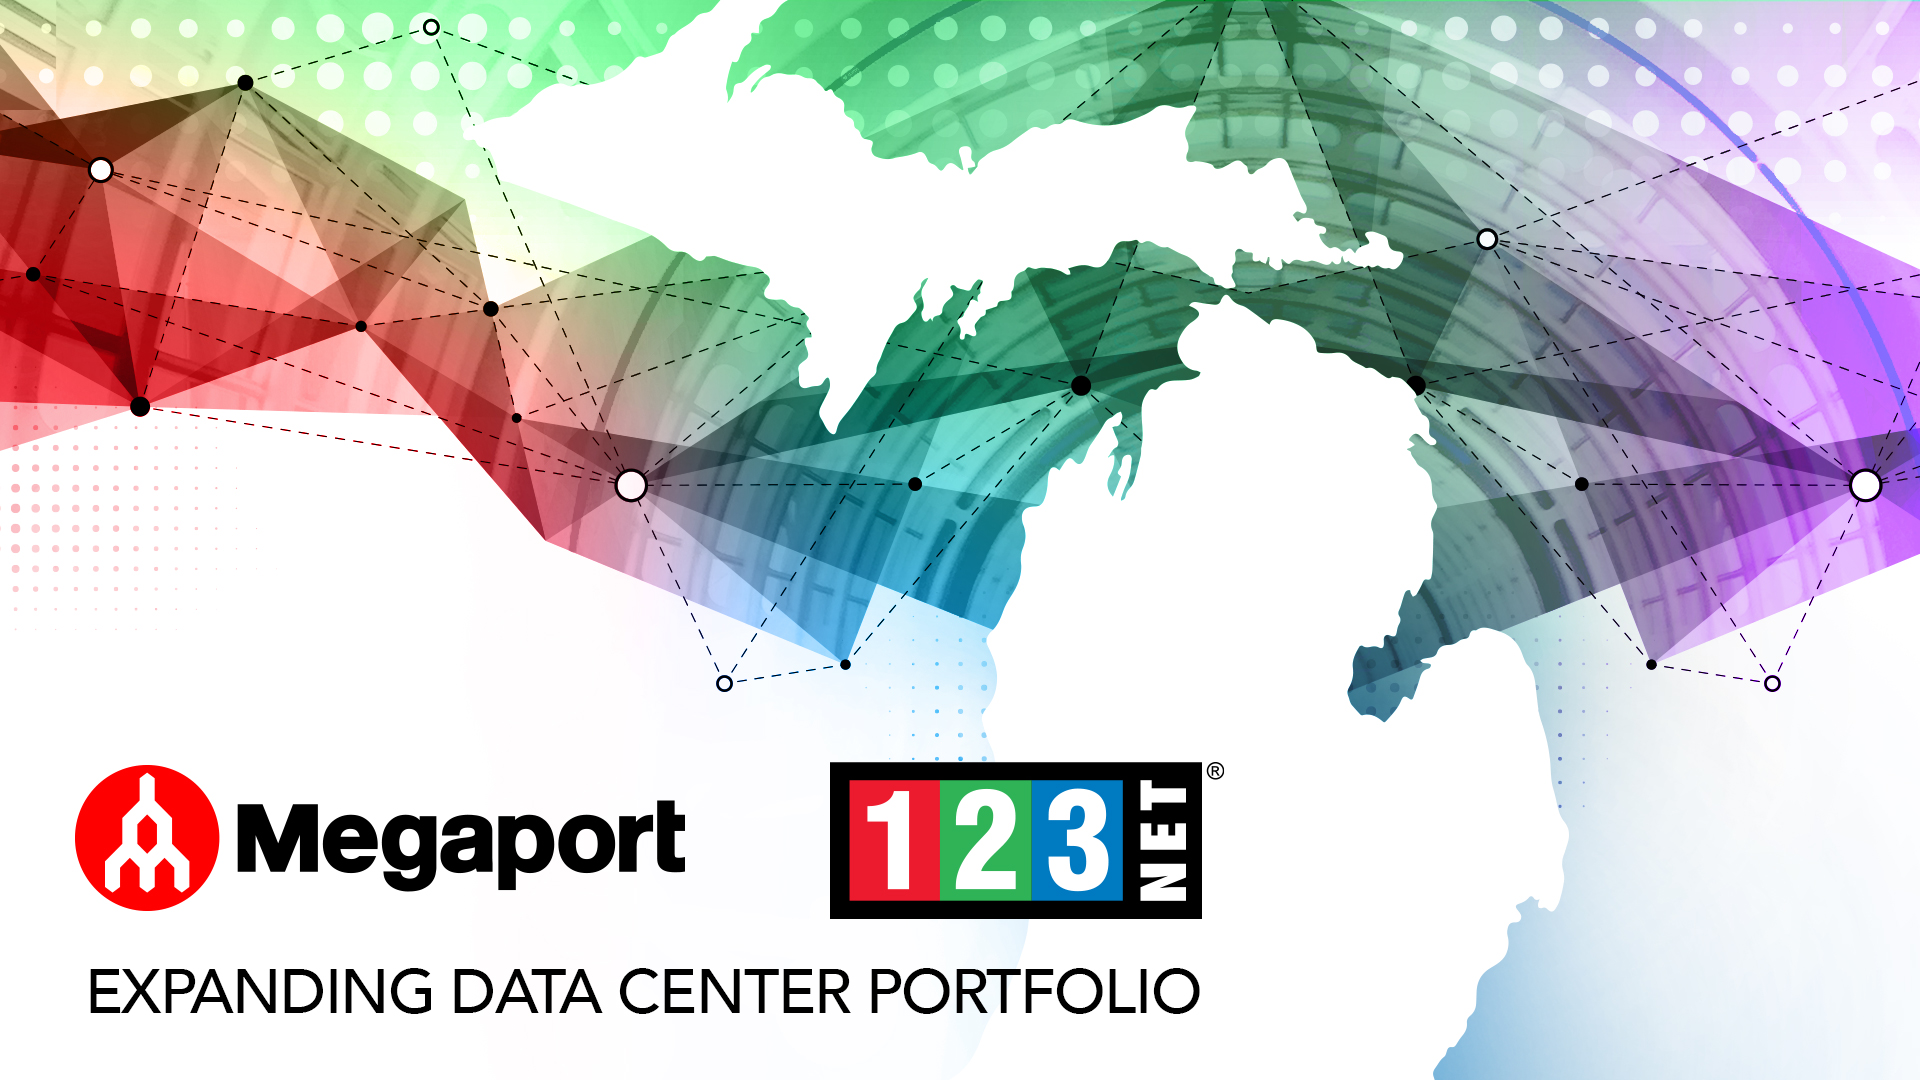 123NET Expands Data Center Portfolio with Megaport